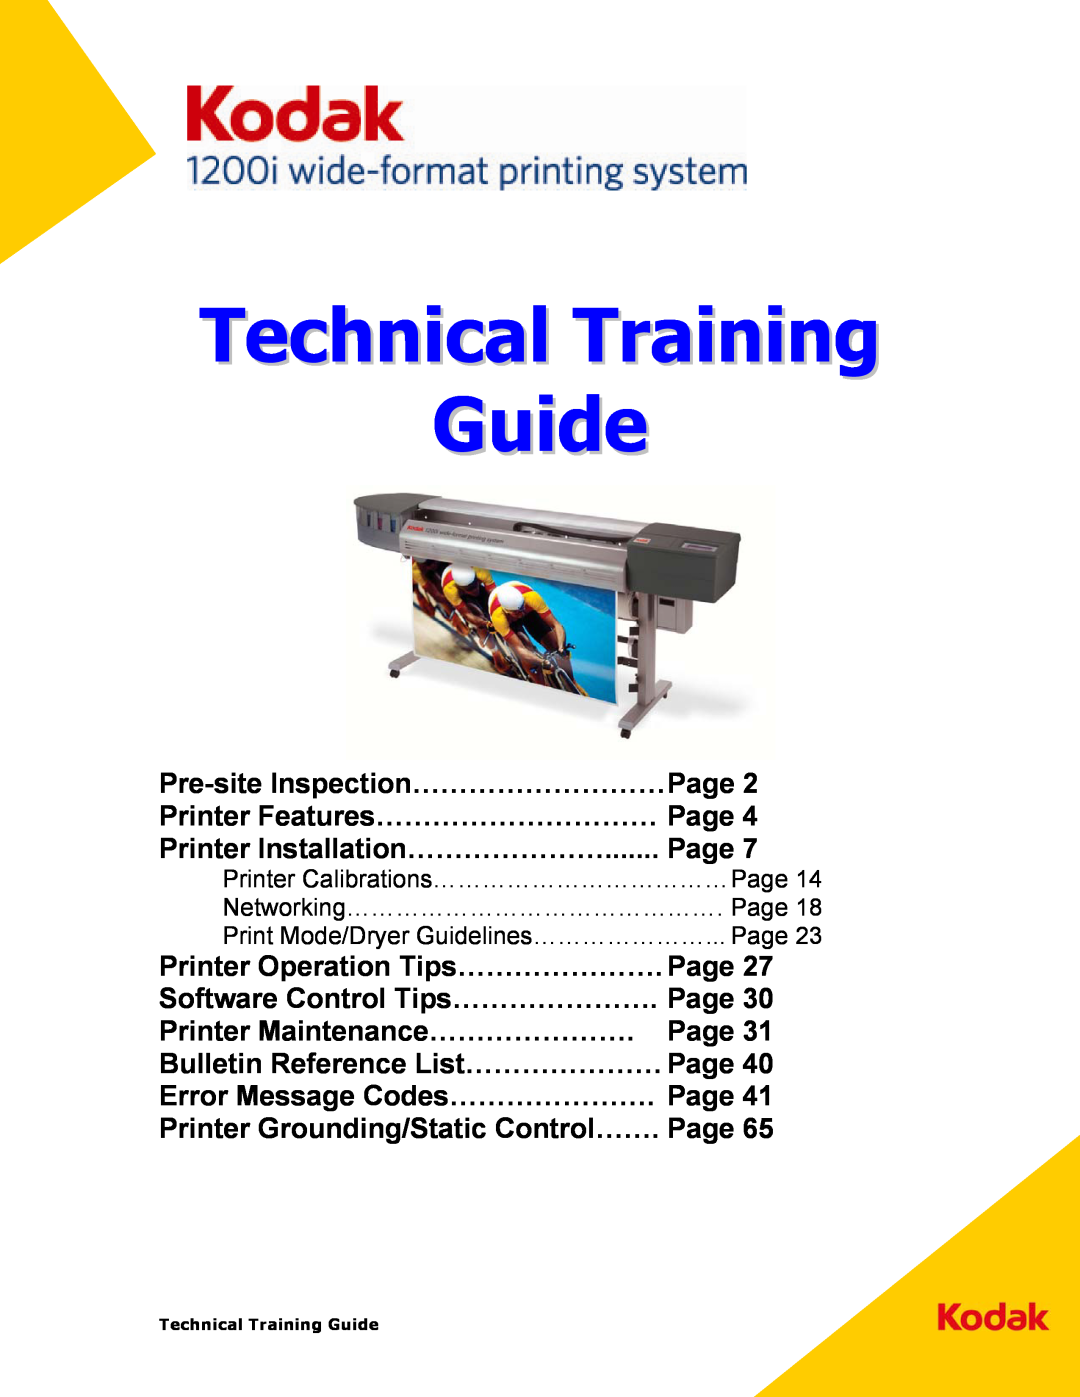 Kodak 1200I manual Technical Training Guide 